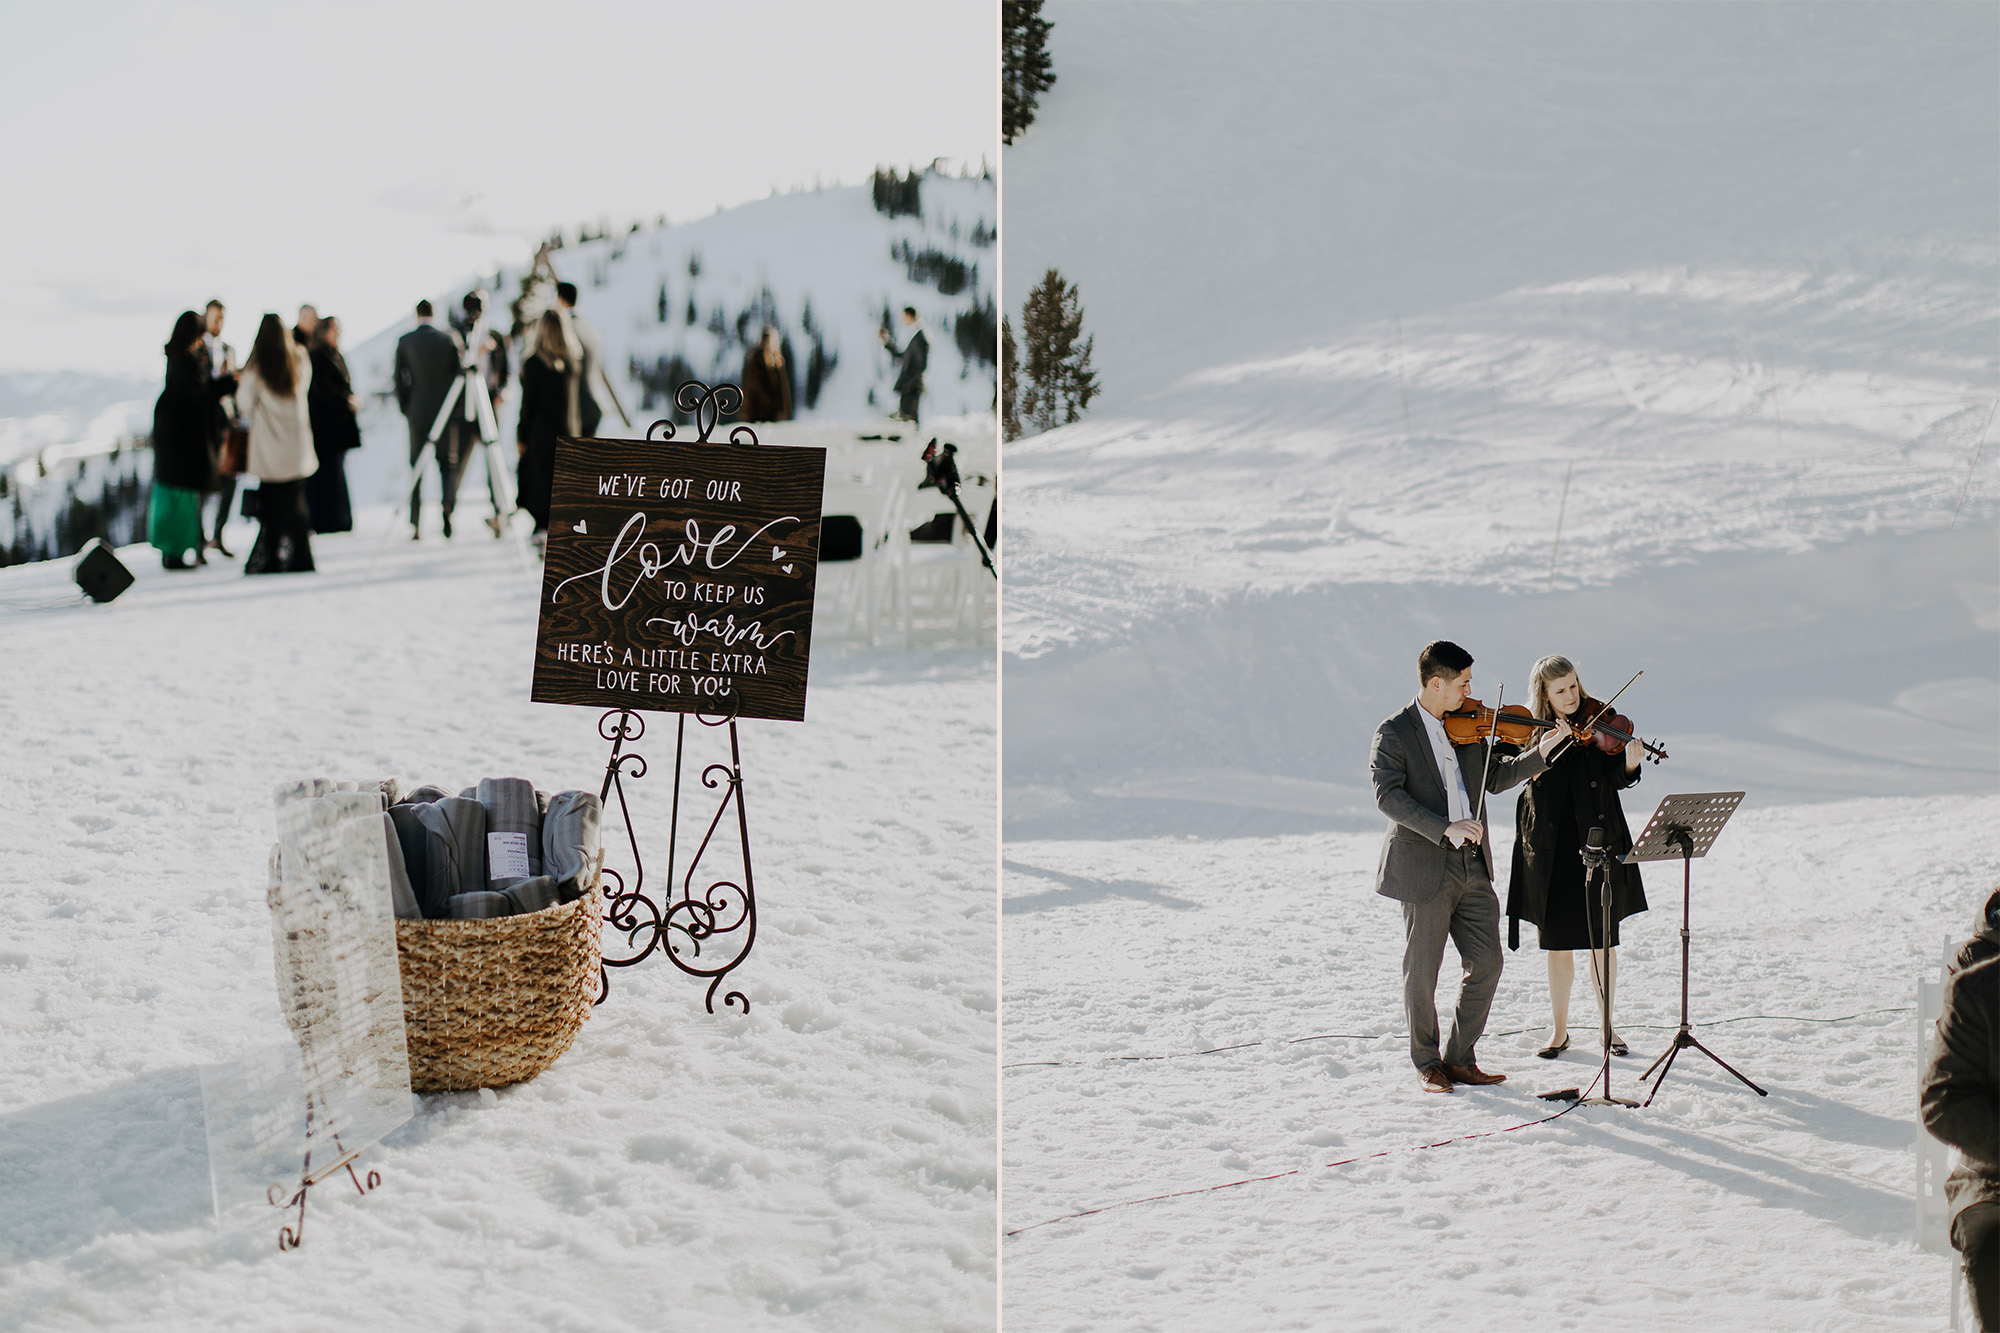 Caldera House Teton Village Ski Resort Wyoming Destination Traveling Wedding Photography